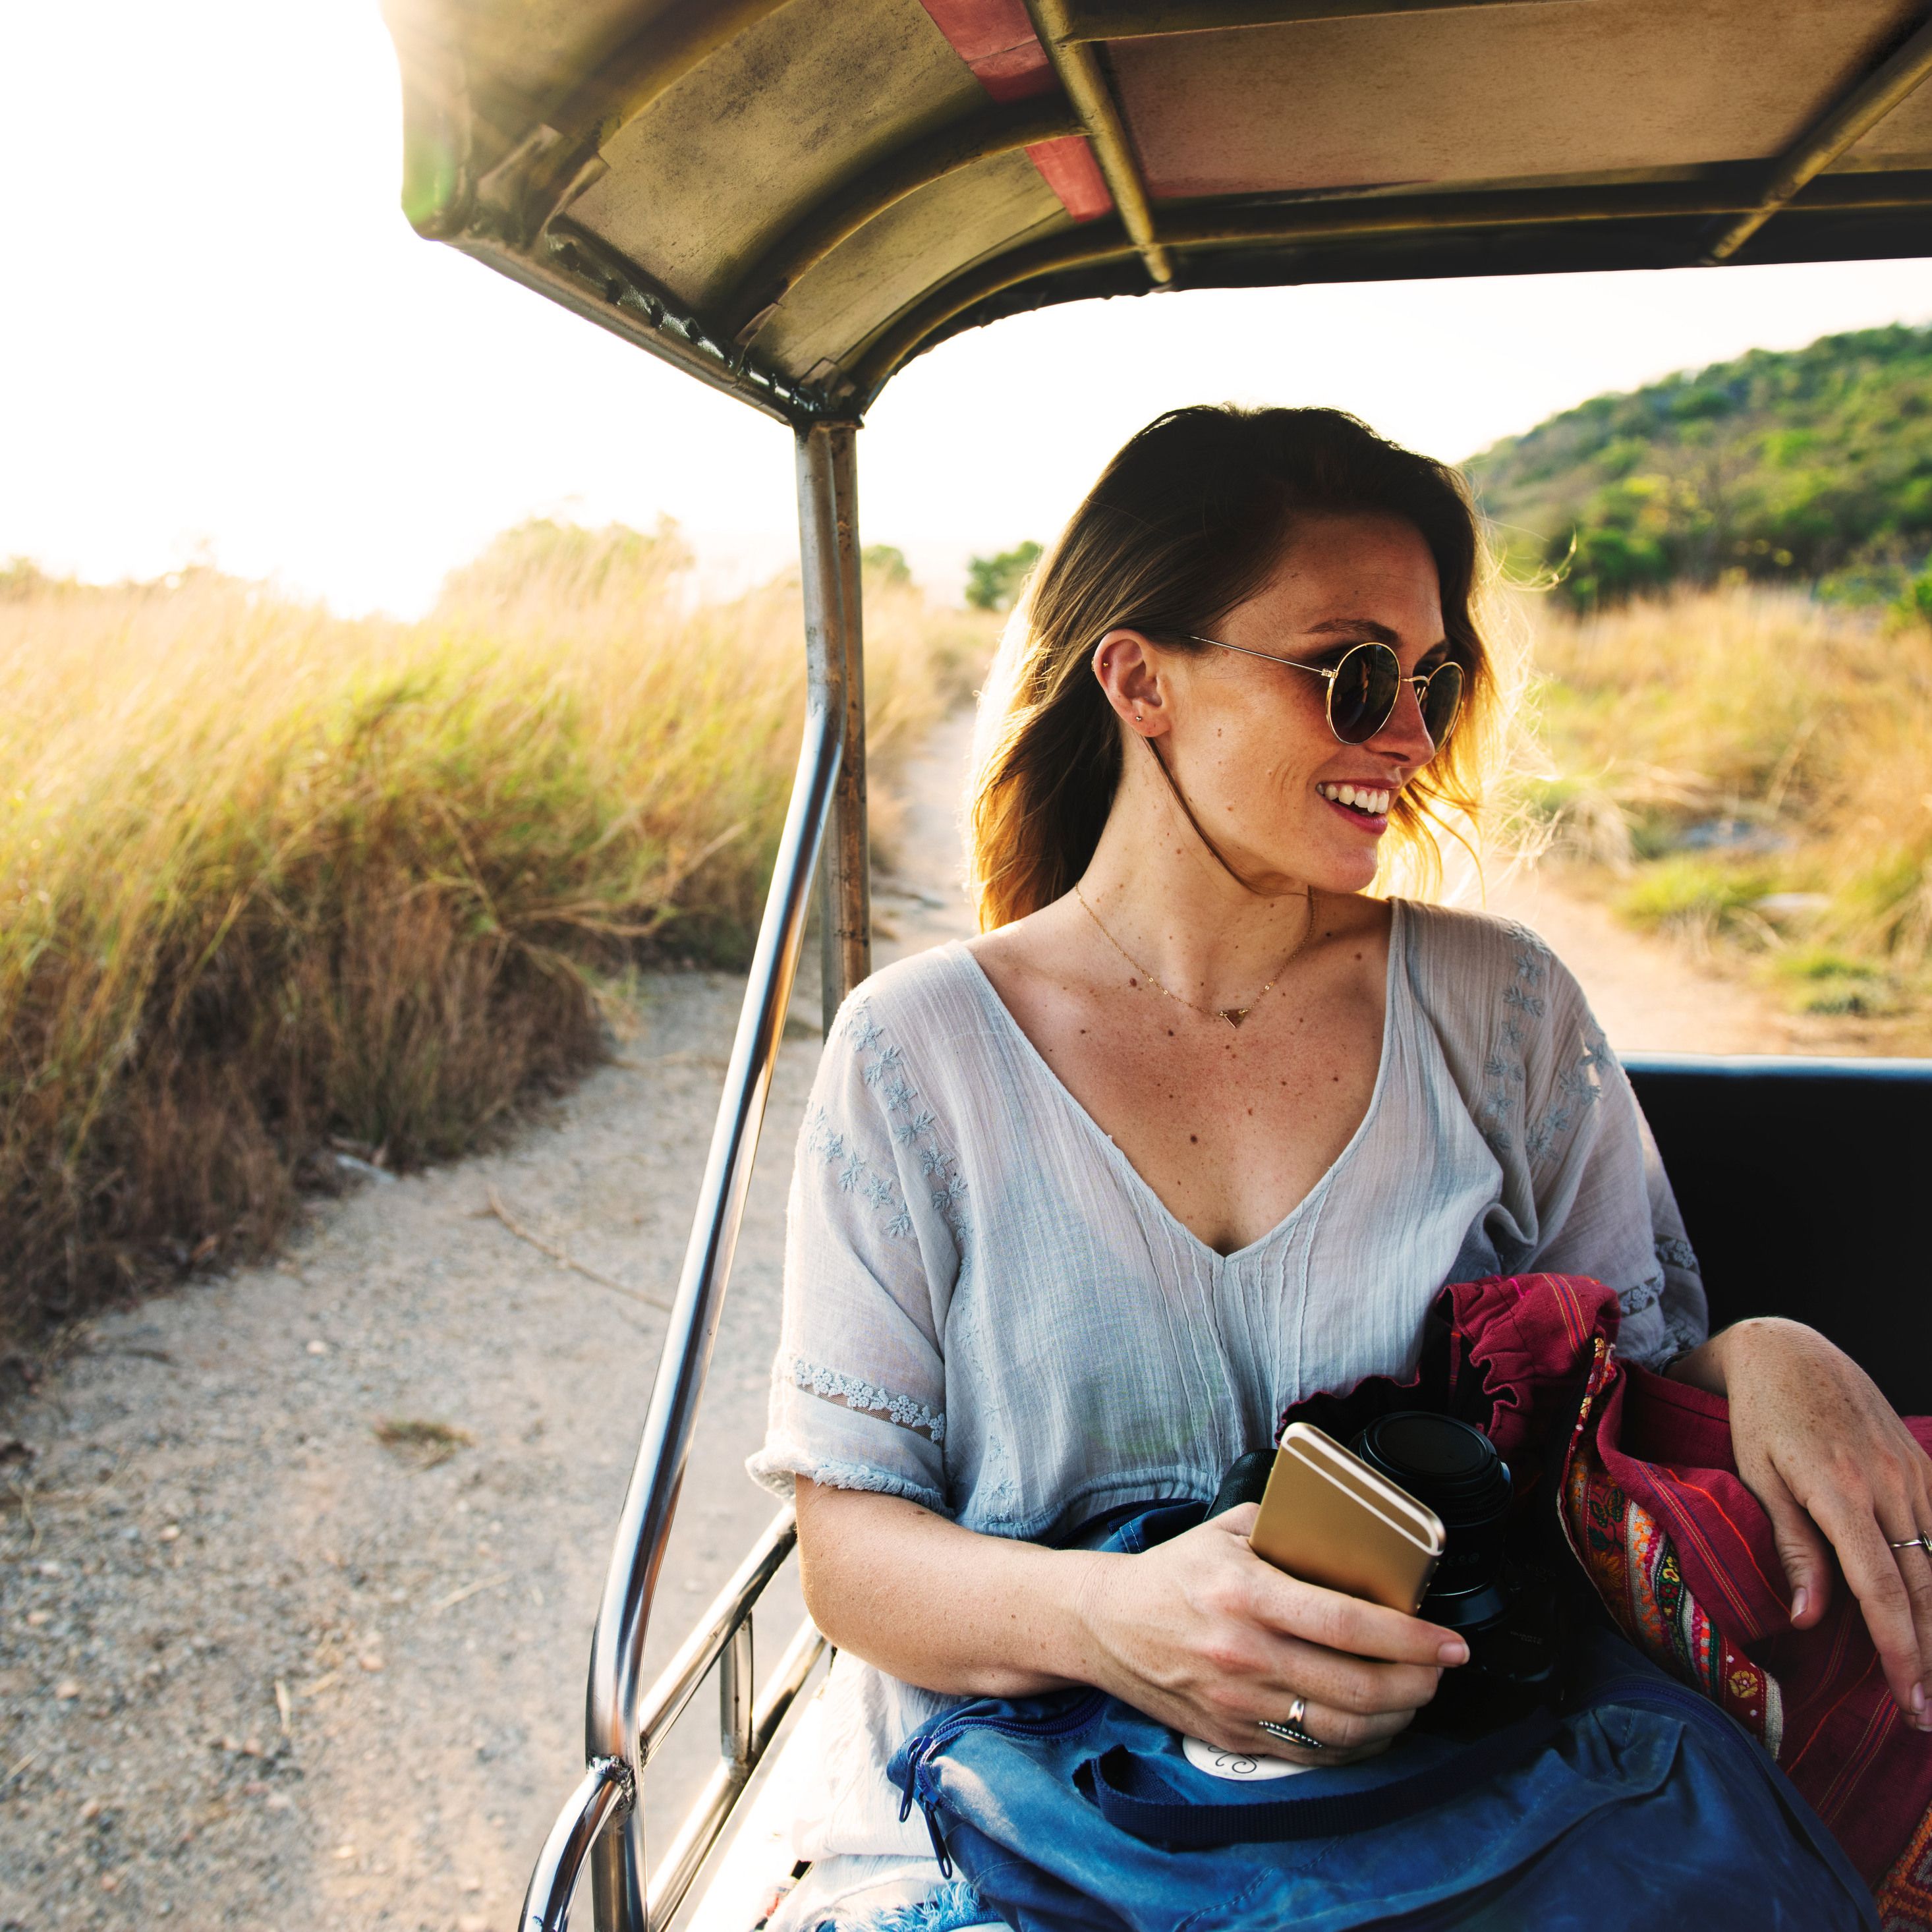 Women Outdoors Adventure Sunglasses Happy Travelling 5k